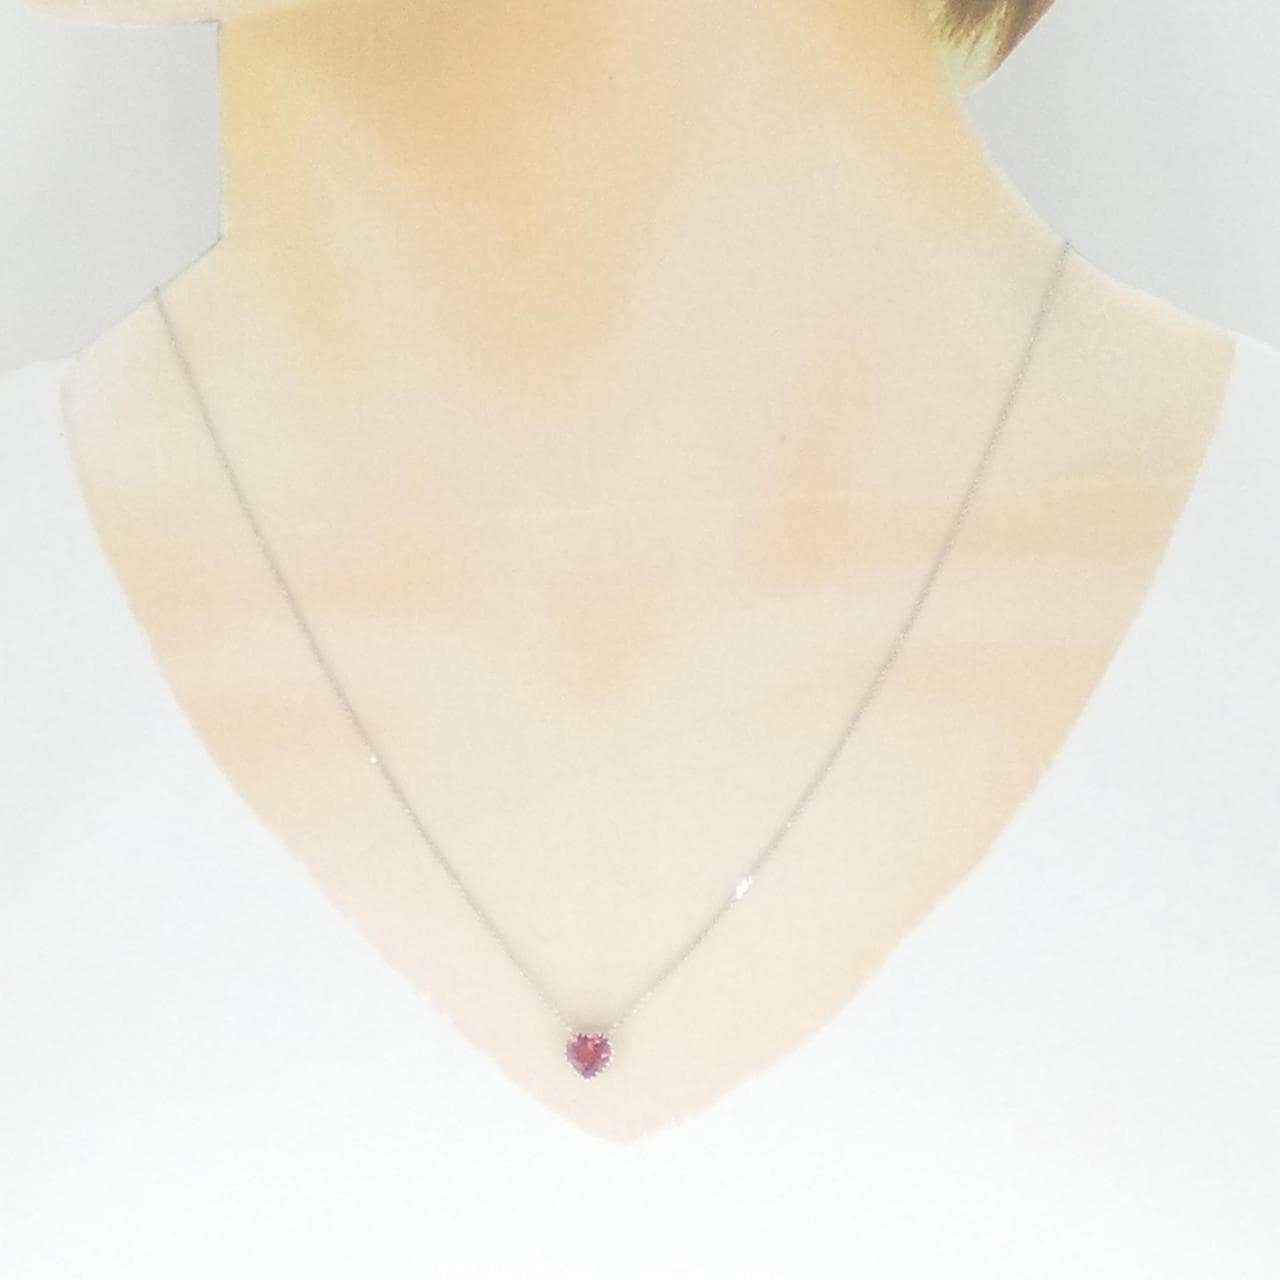 K18WG heart Tourmaline necklace 0.75CT